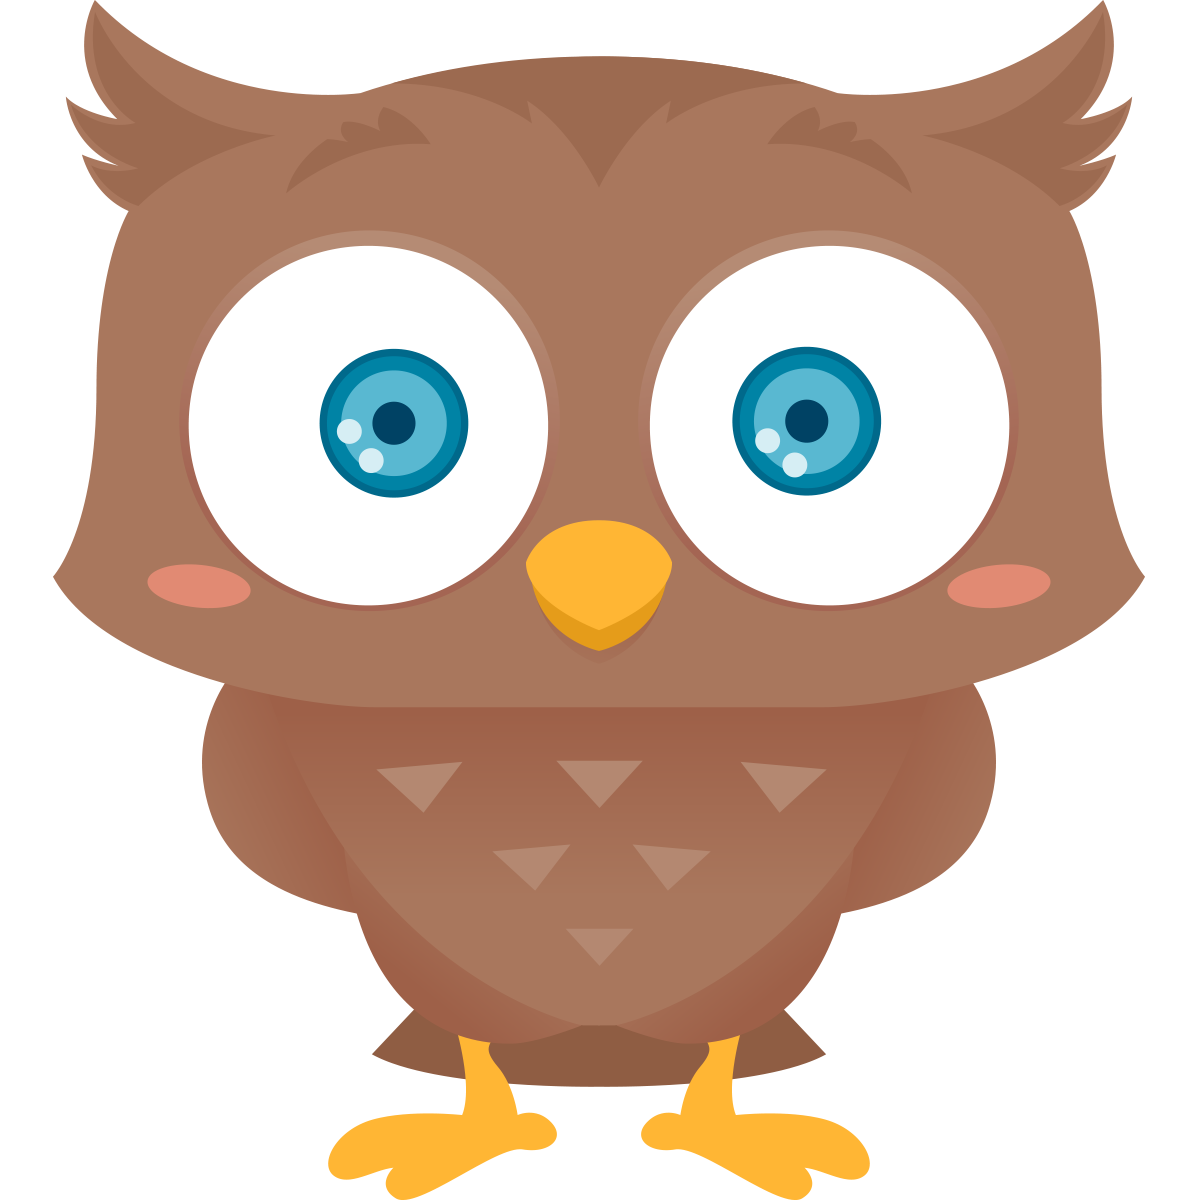 Cute owl clipart free download - ClipartFox